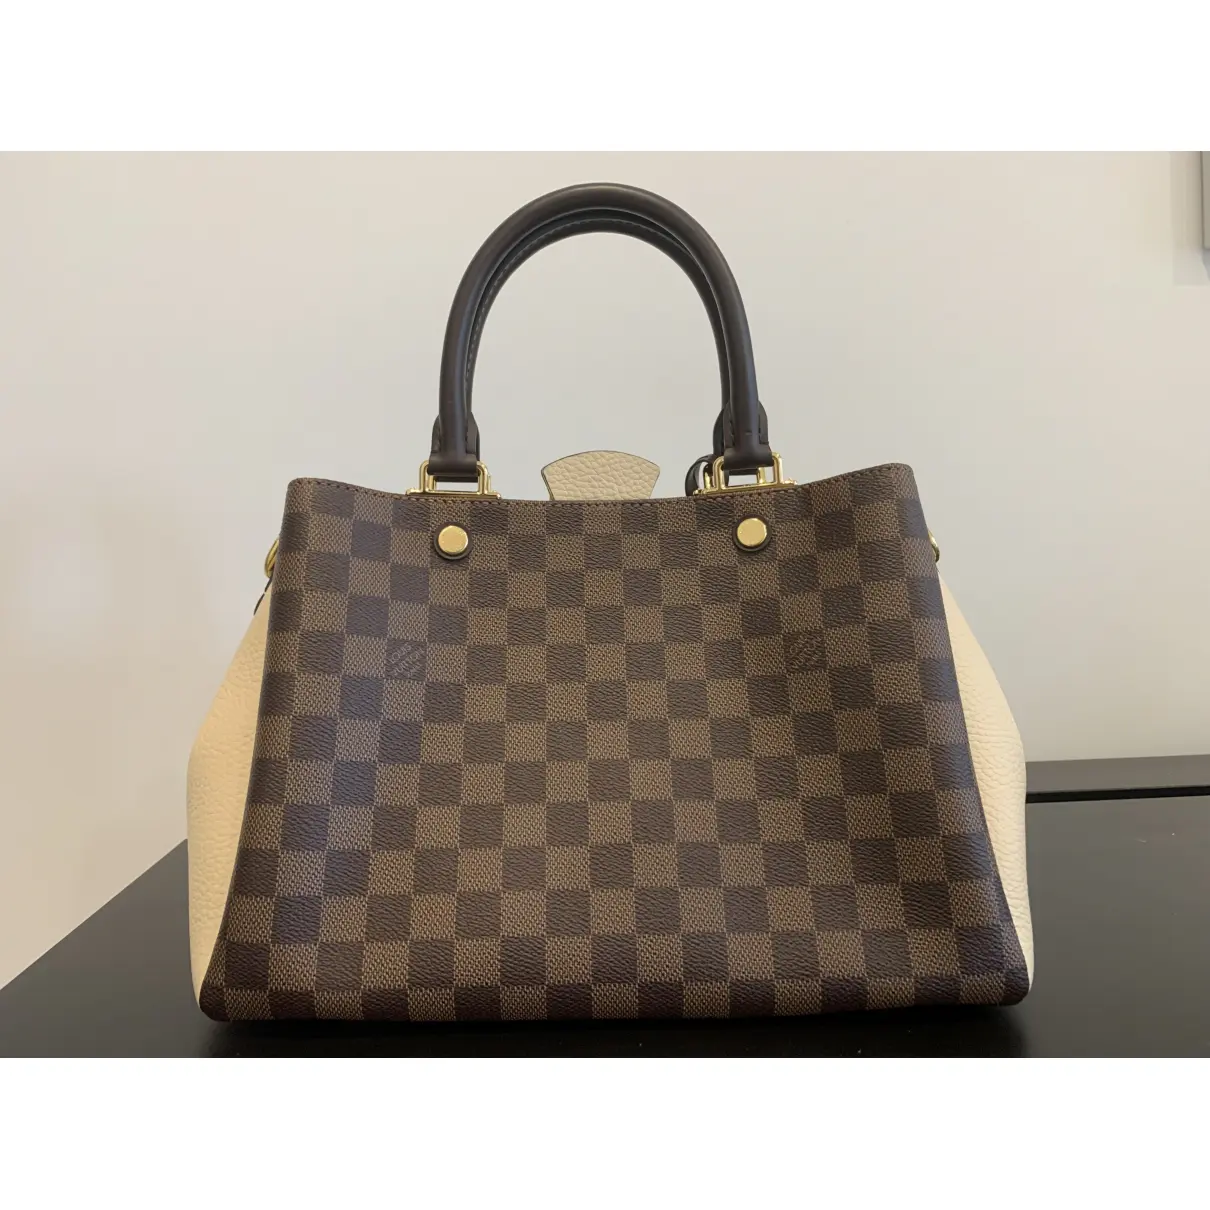 Buy Louis Vuitton Brittany leather handbag online